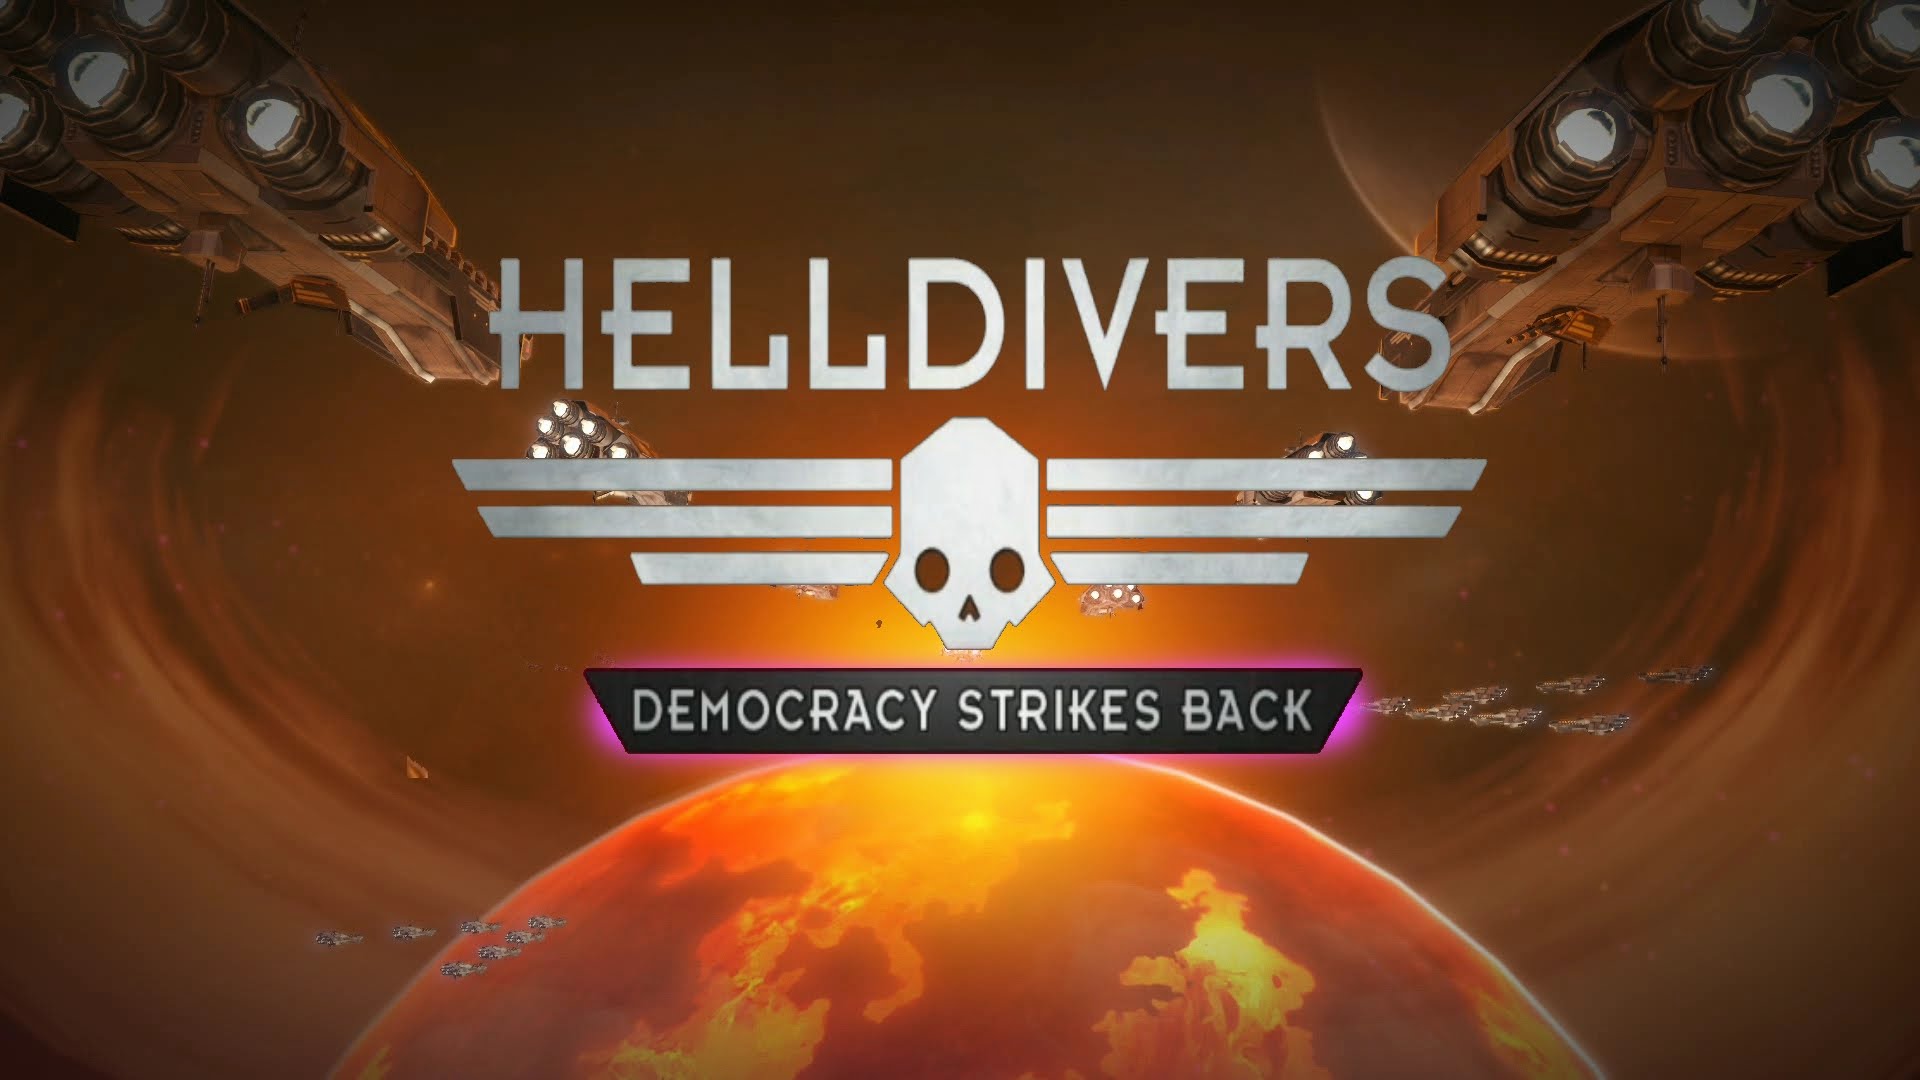 Helldivers gameplay. Helldivers геймплей. Helldivers трейлер русский. Хеллдиверс 2. Helldivers оружие.